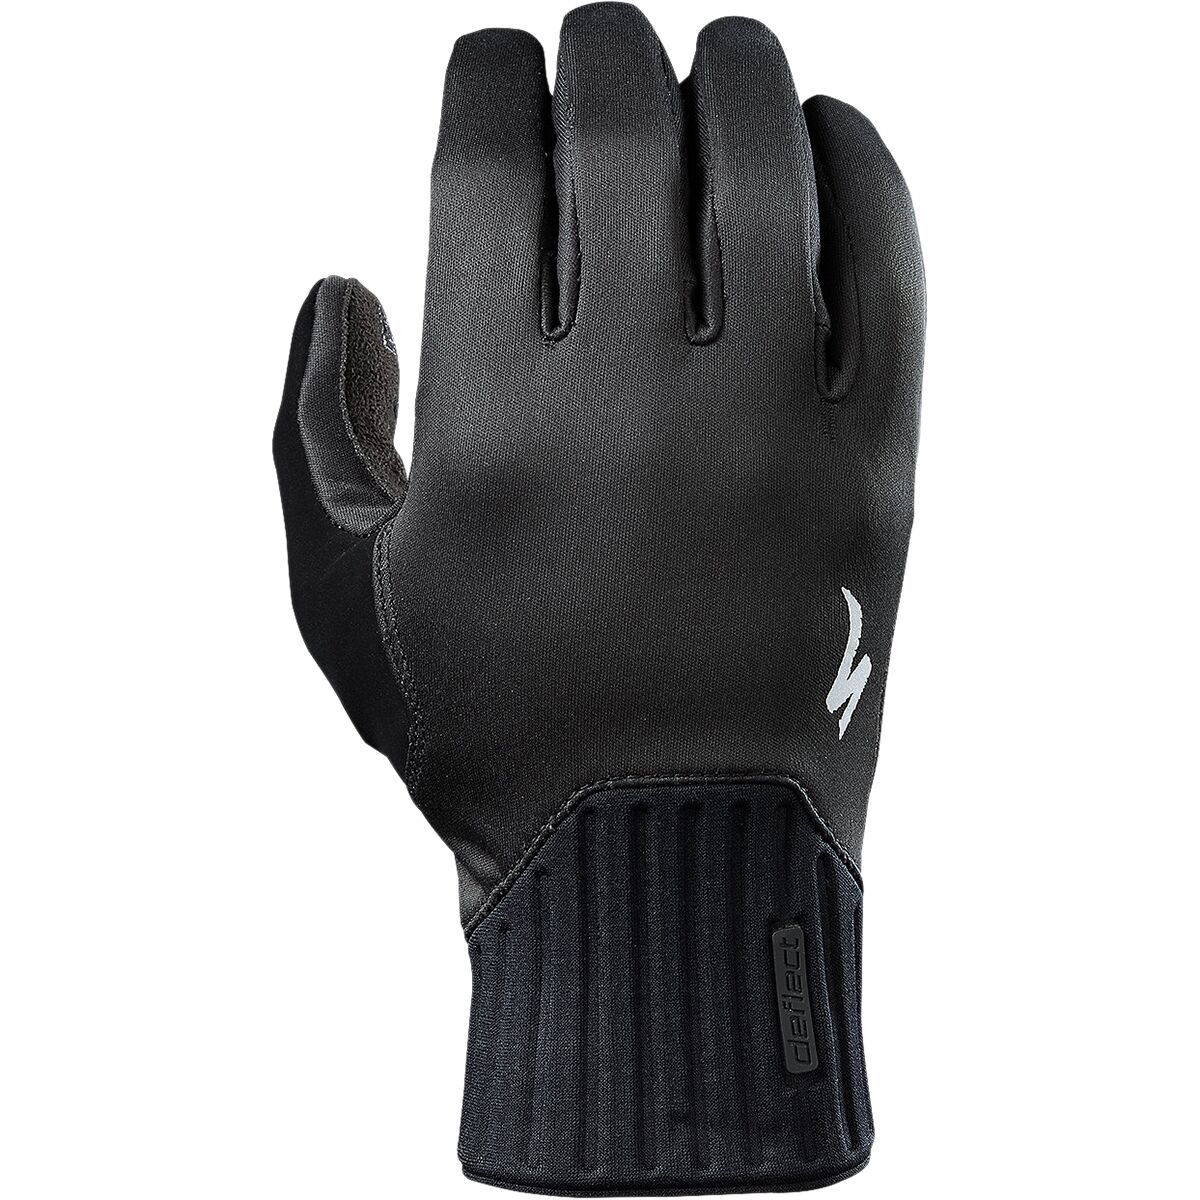 Specialized Deflect Glove - Men